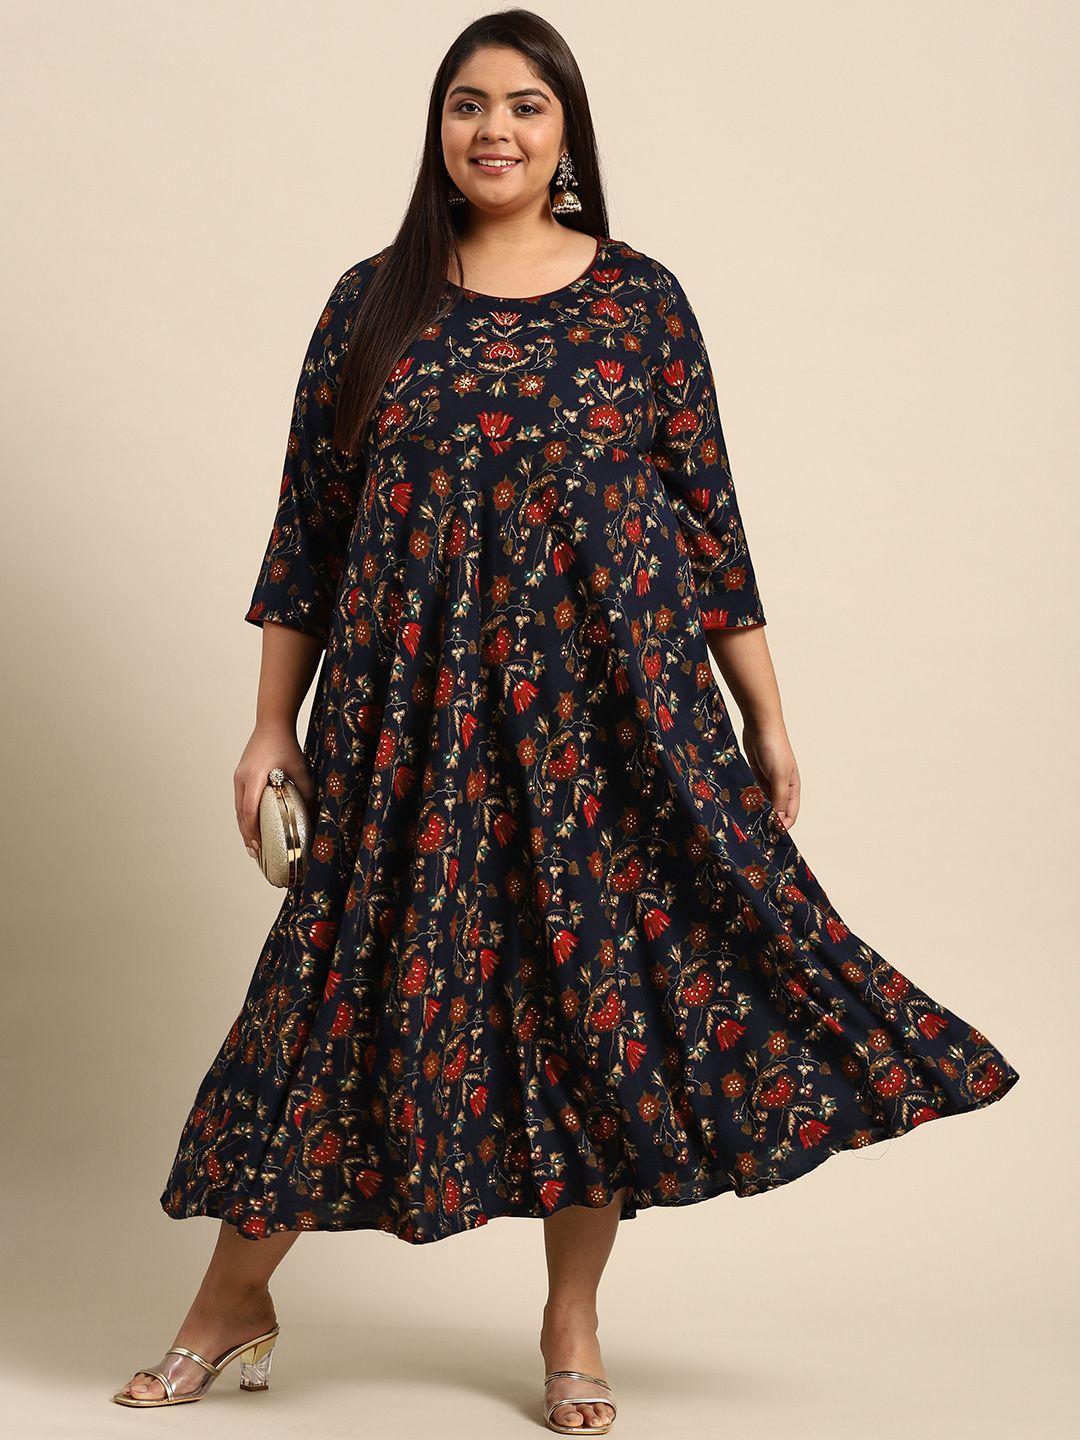 rangmayee navy blue & maroon floral liva ethnic a-line maxi dress